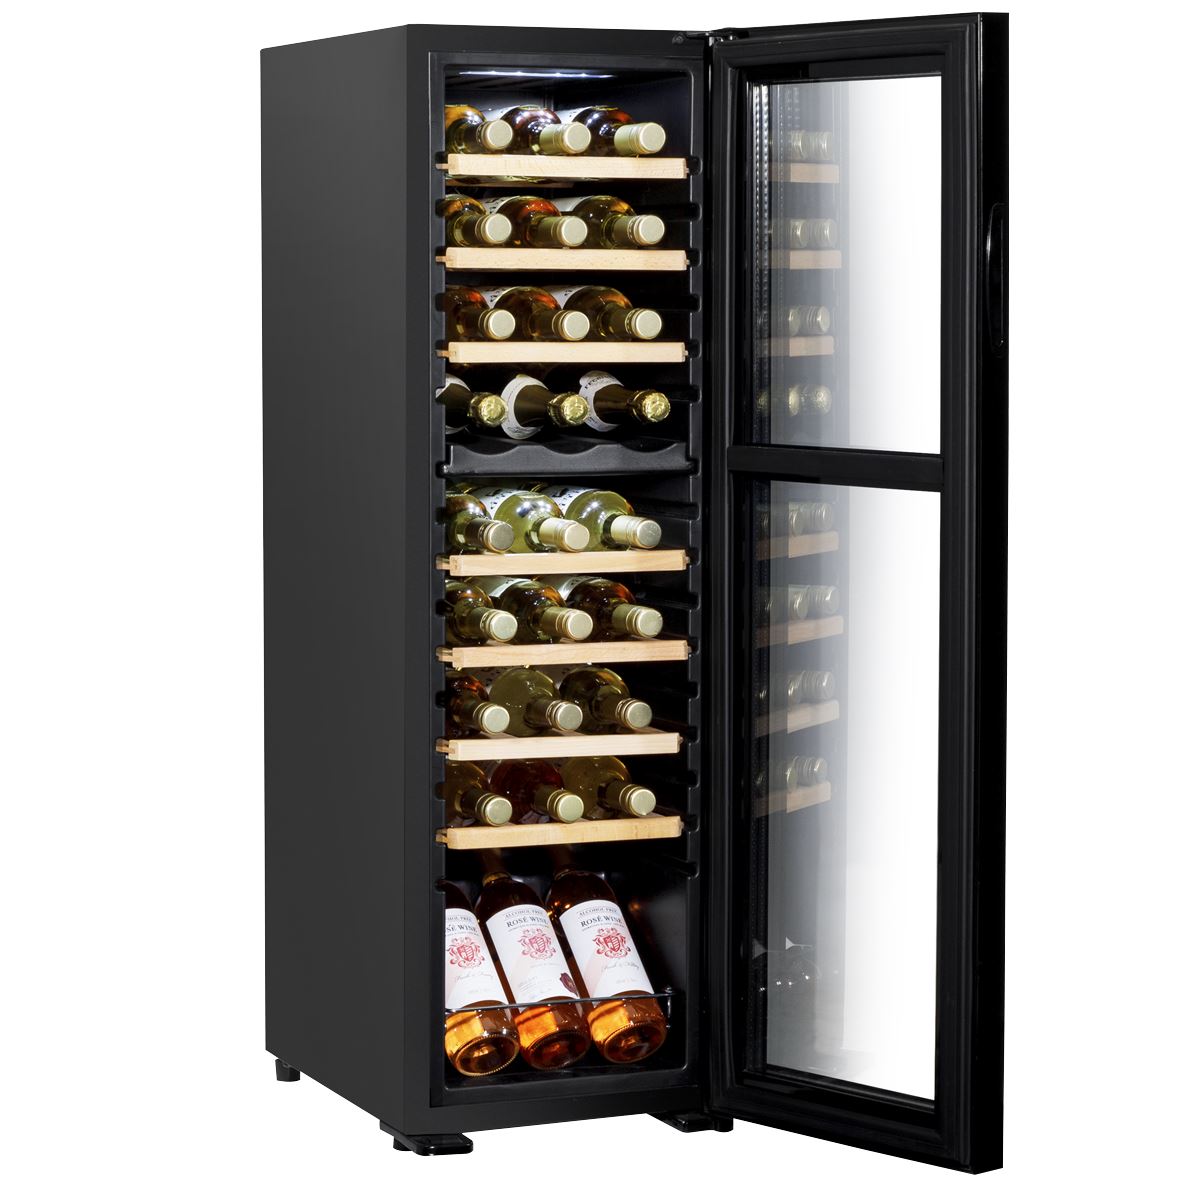 Baridi 27 Bottle Dual Zone Wine Cooler, Fridge with Digital Touchscreen Controls, Wooden Shelves & LED Light, Black